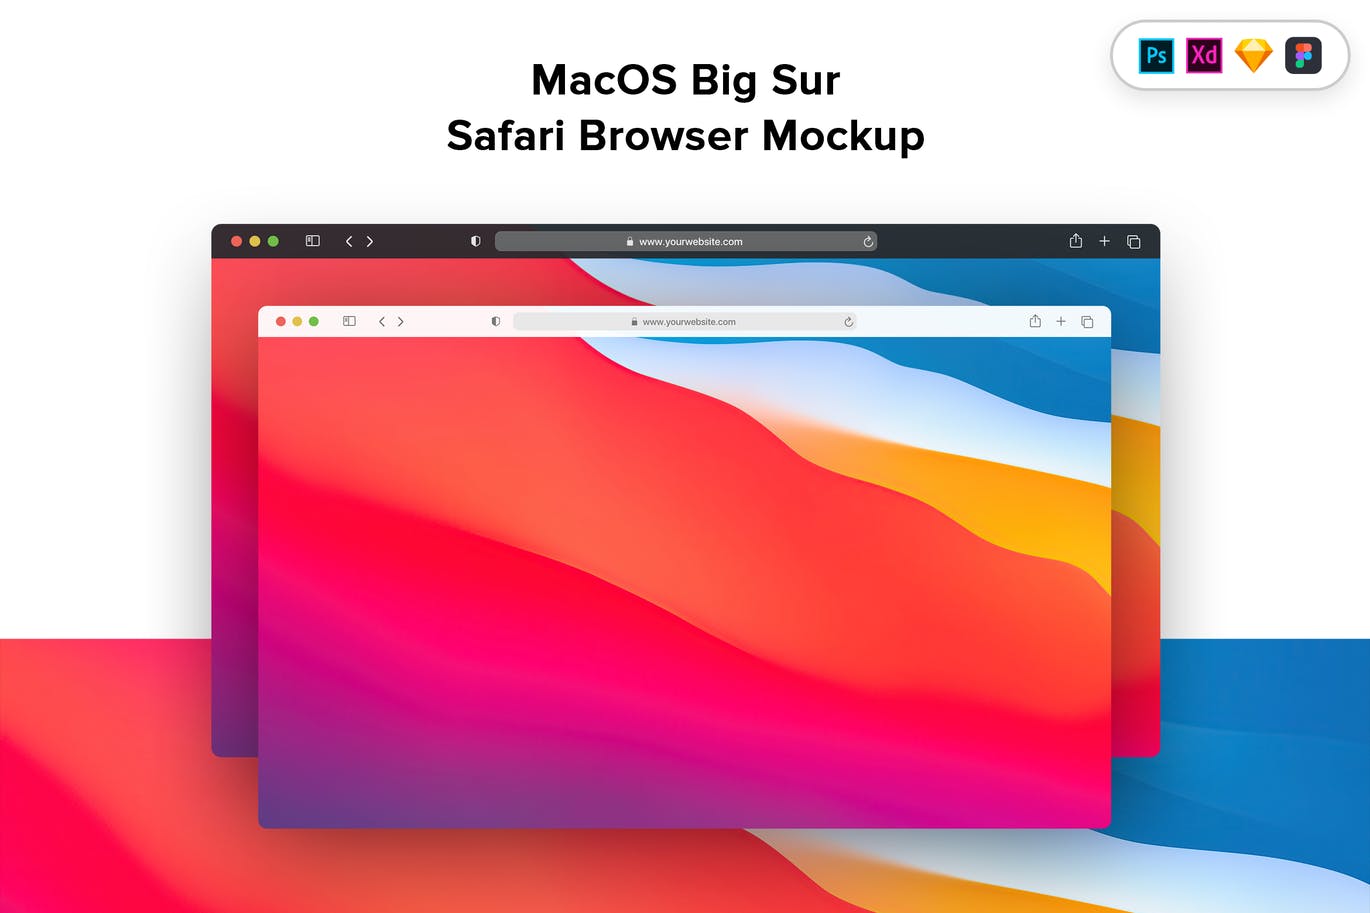 Safari Browser Mockup - MacOS Big Sur Version